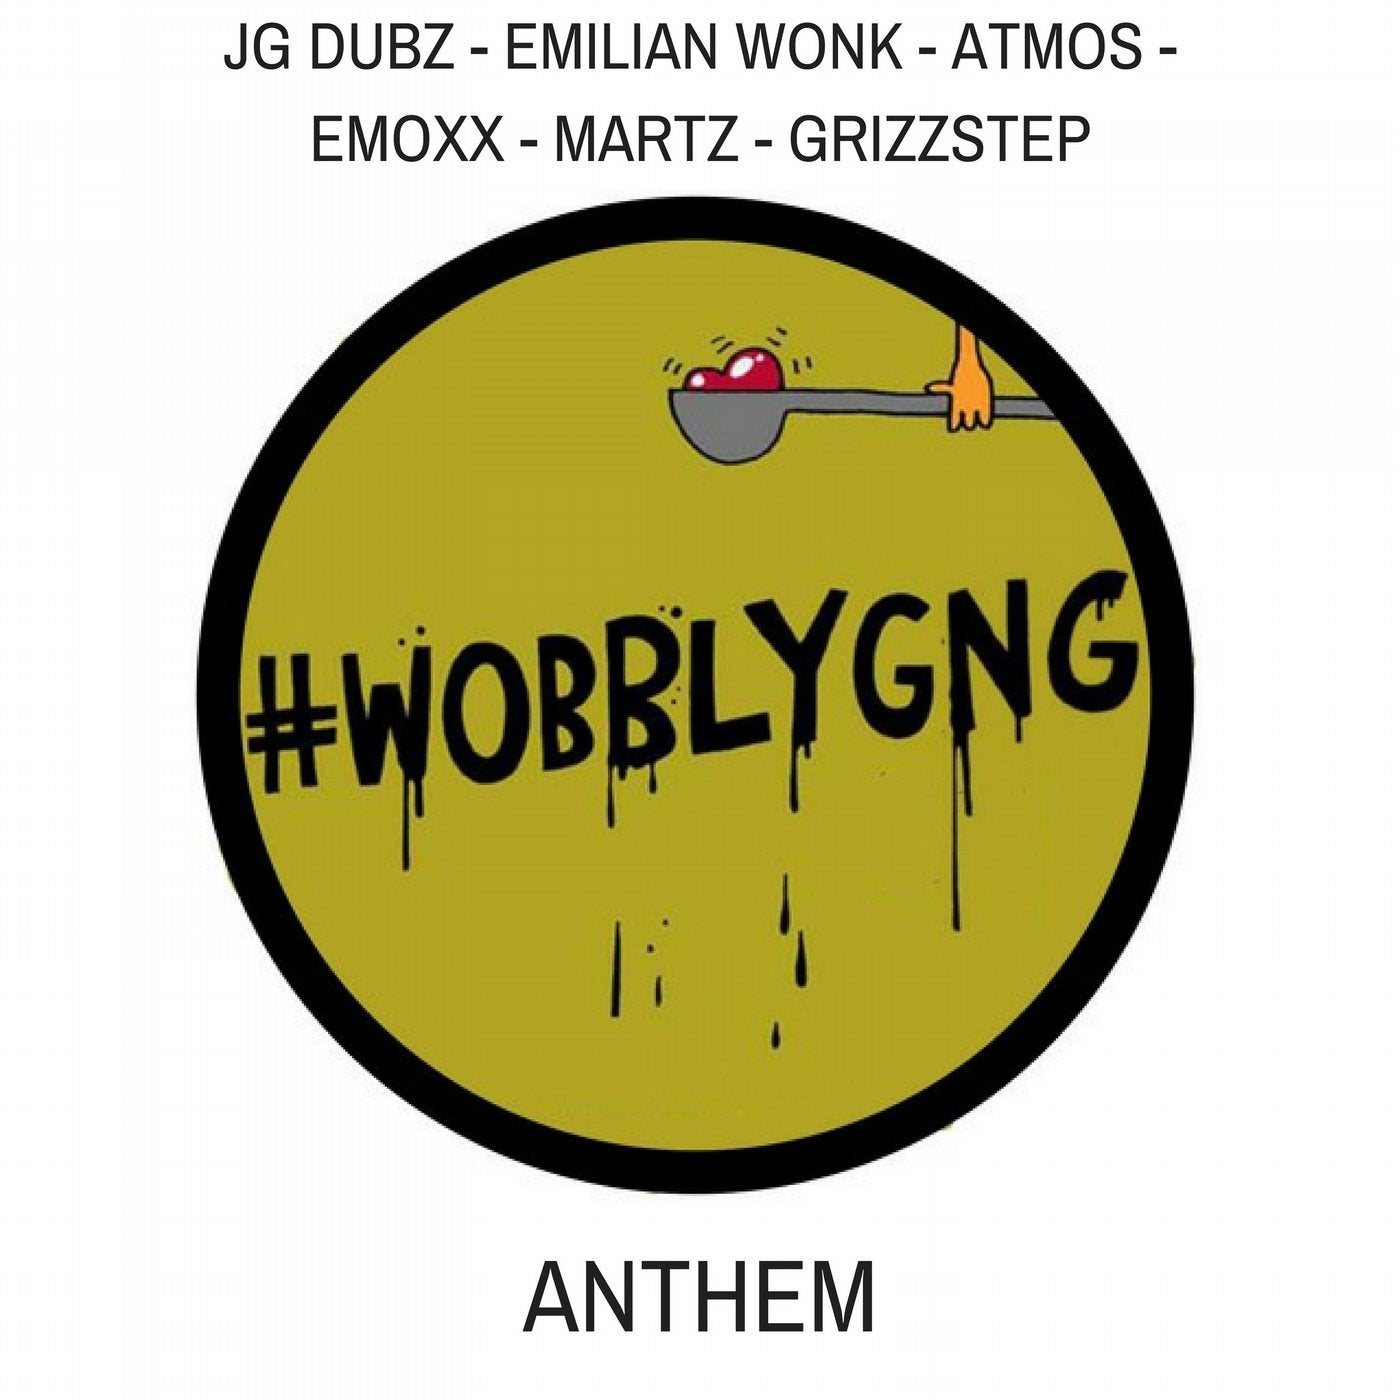 #WOBBLYGNG ANTHEM